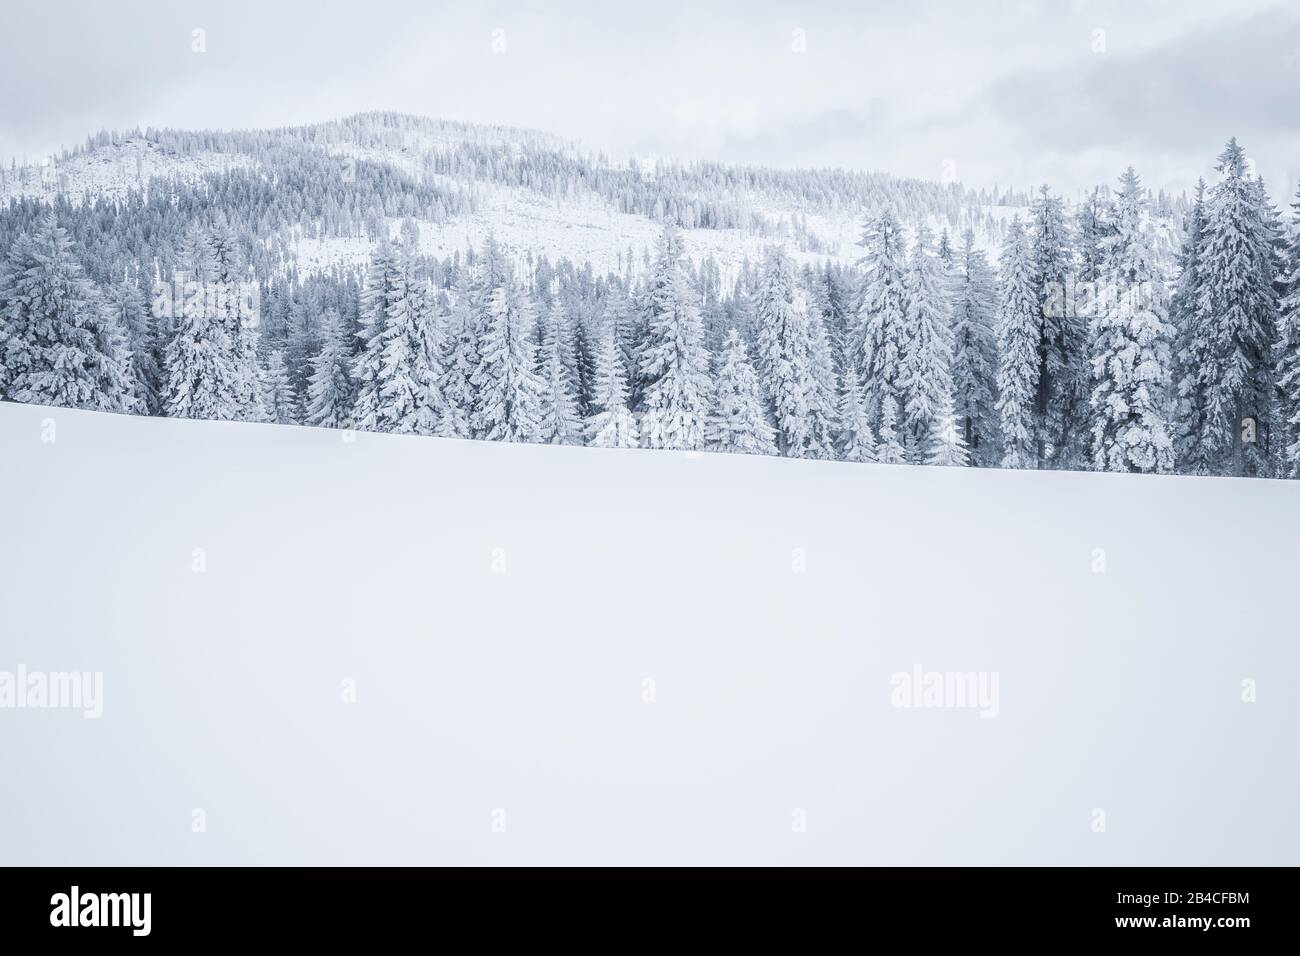 Snowy fir trees in winter Stock Photo